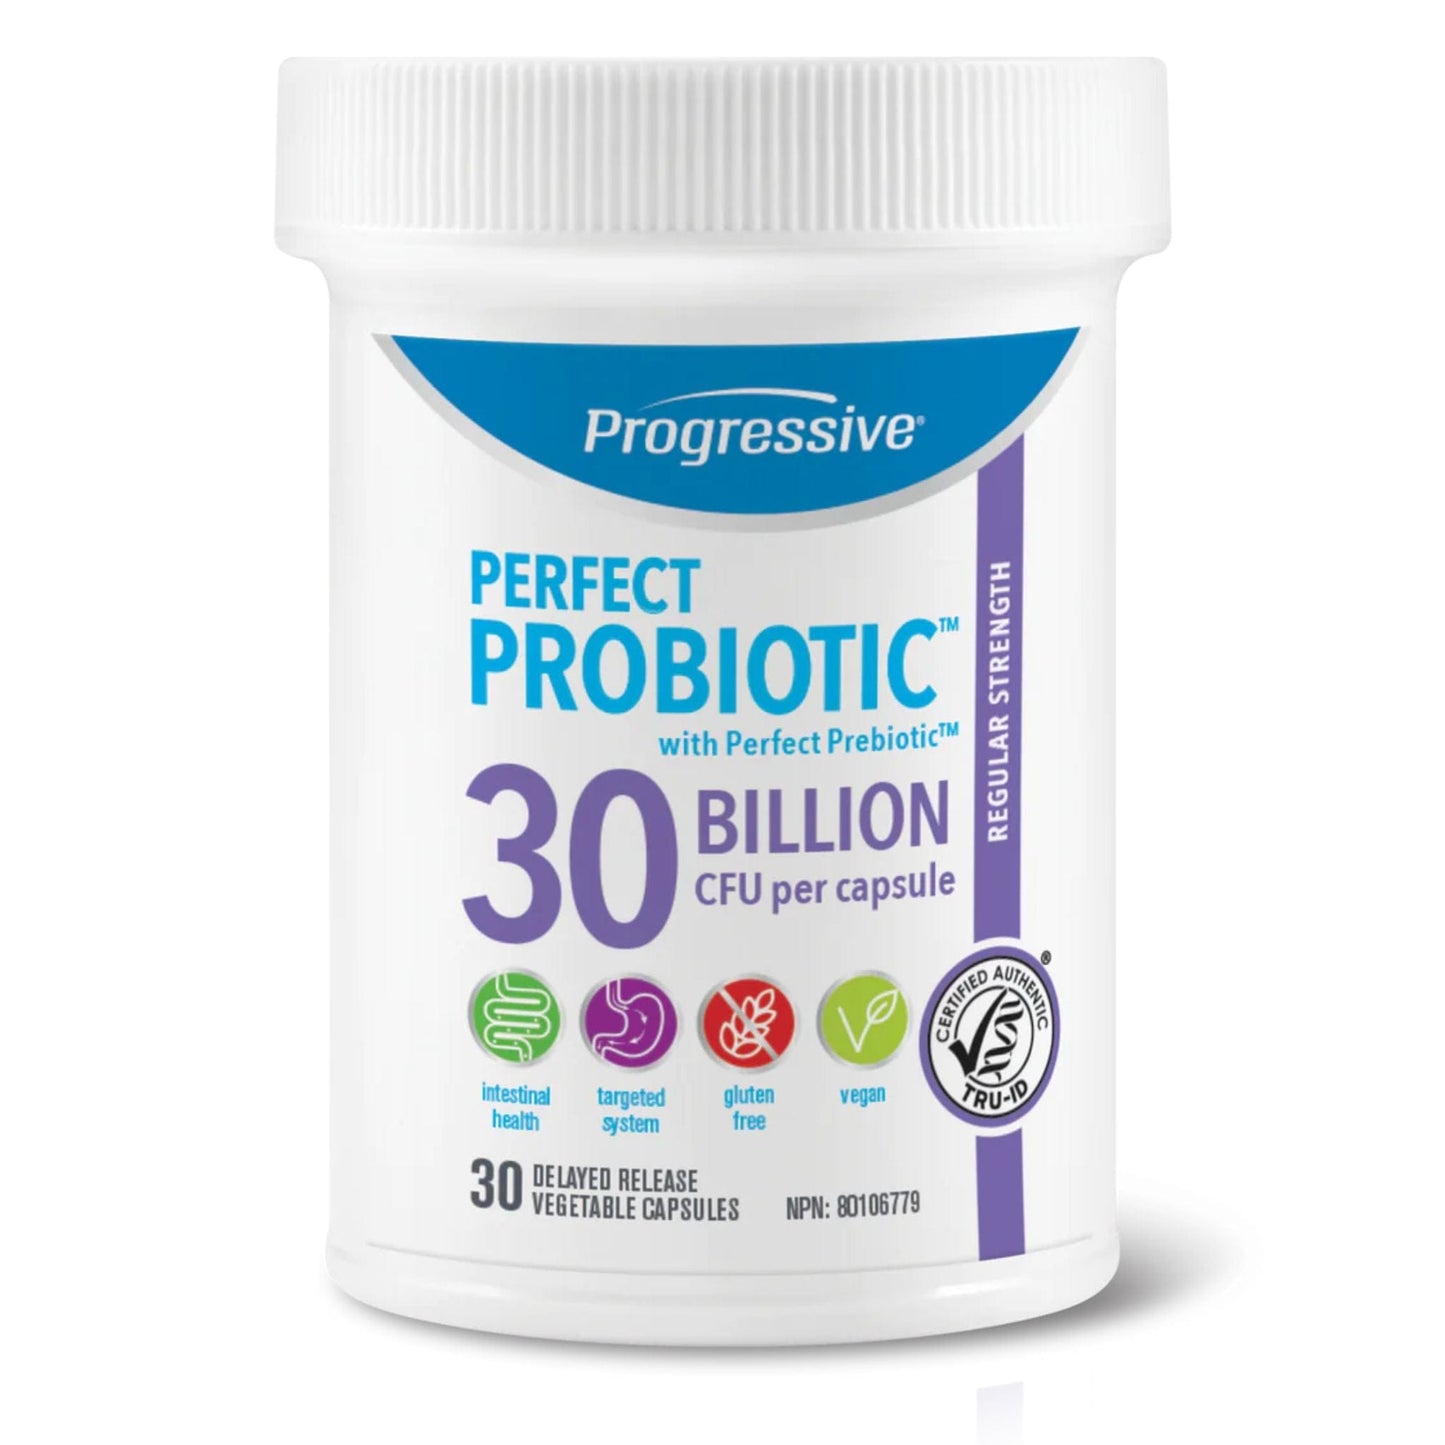 30 Vegetable Capsules | Bottle of Progressive Perfect Probiotic 30 Billion CFU 30 Delayed Release Vegetable Capsules 